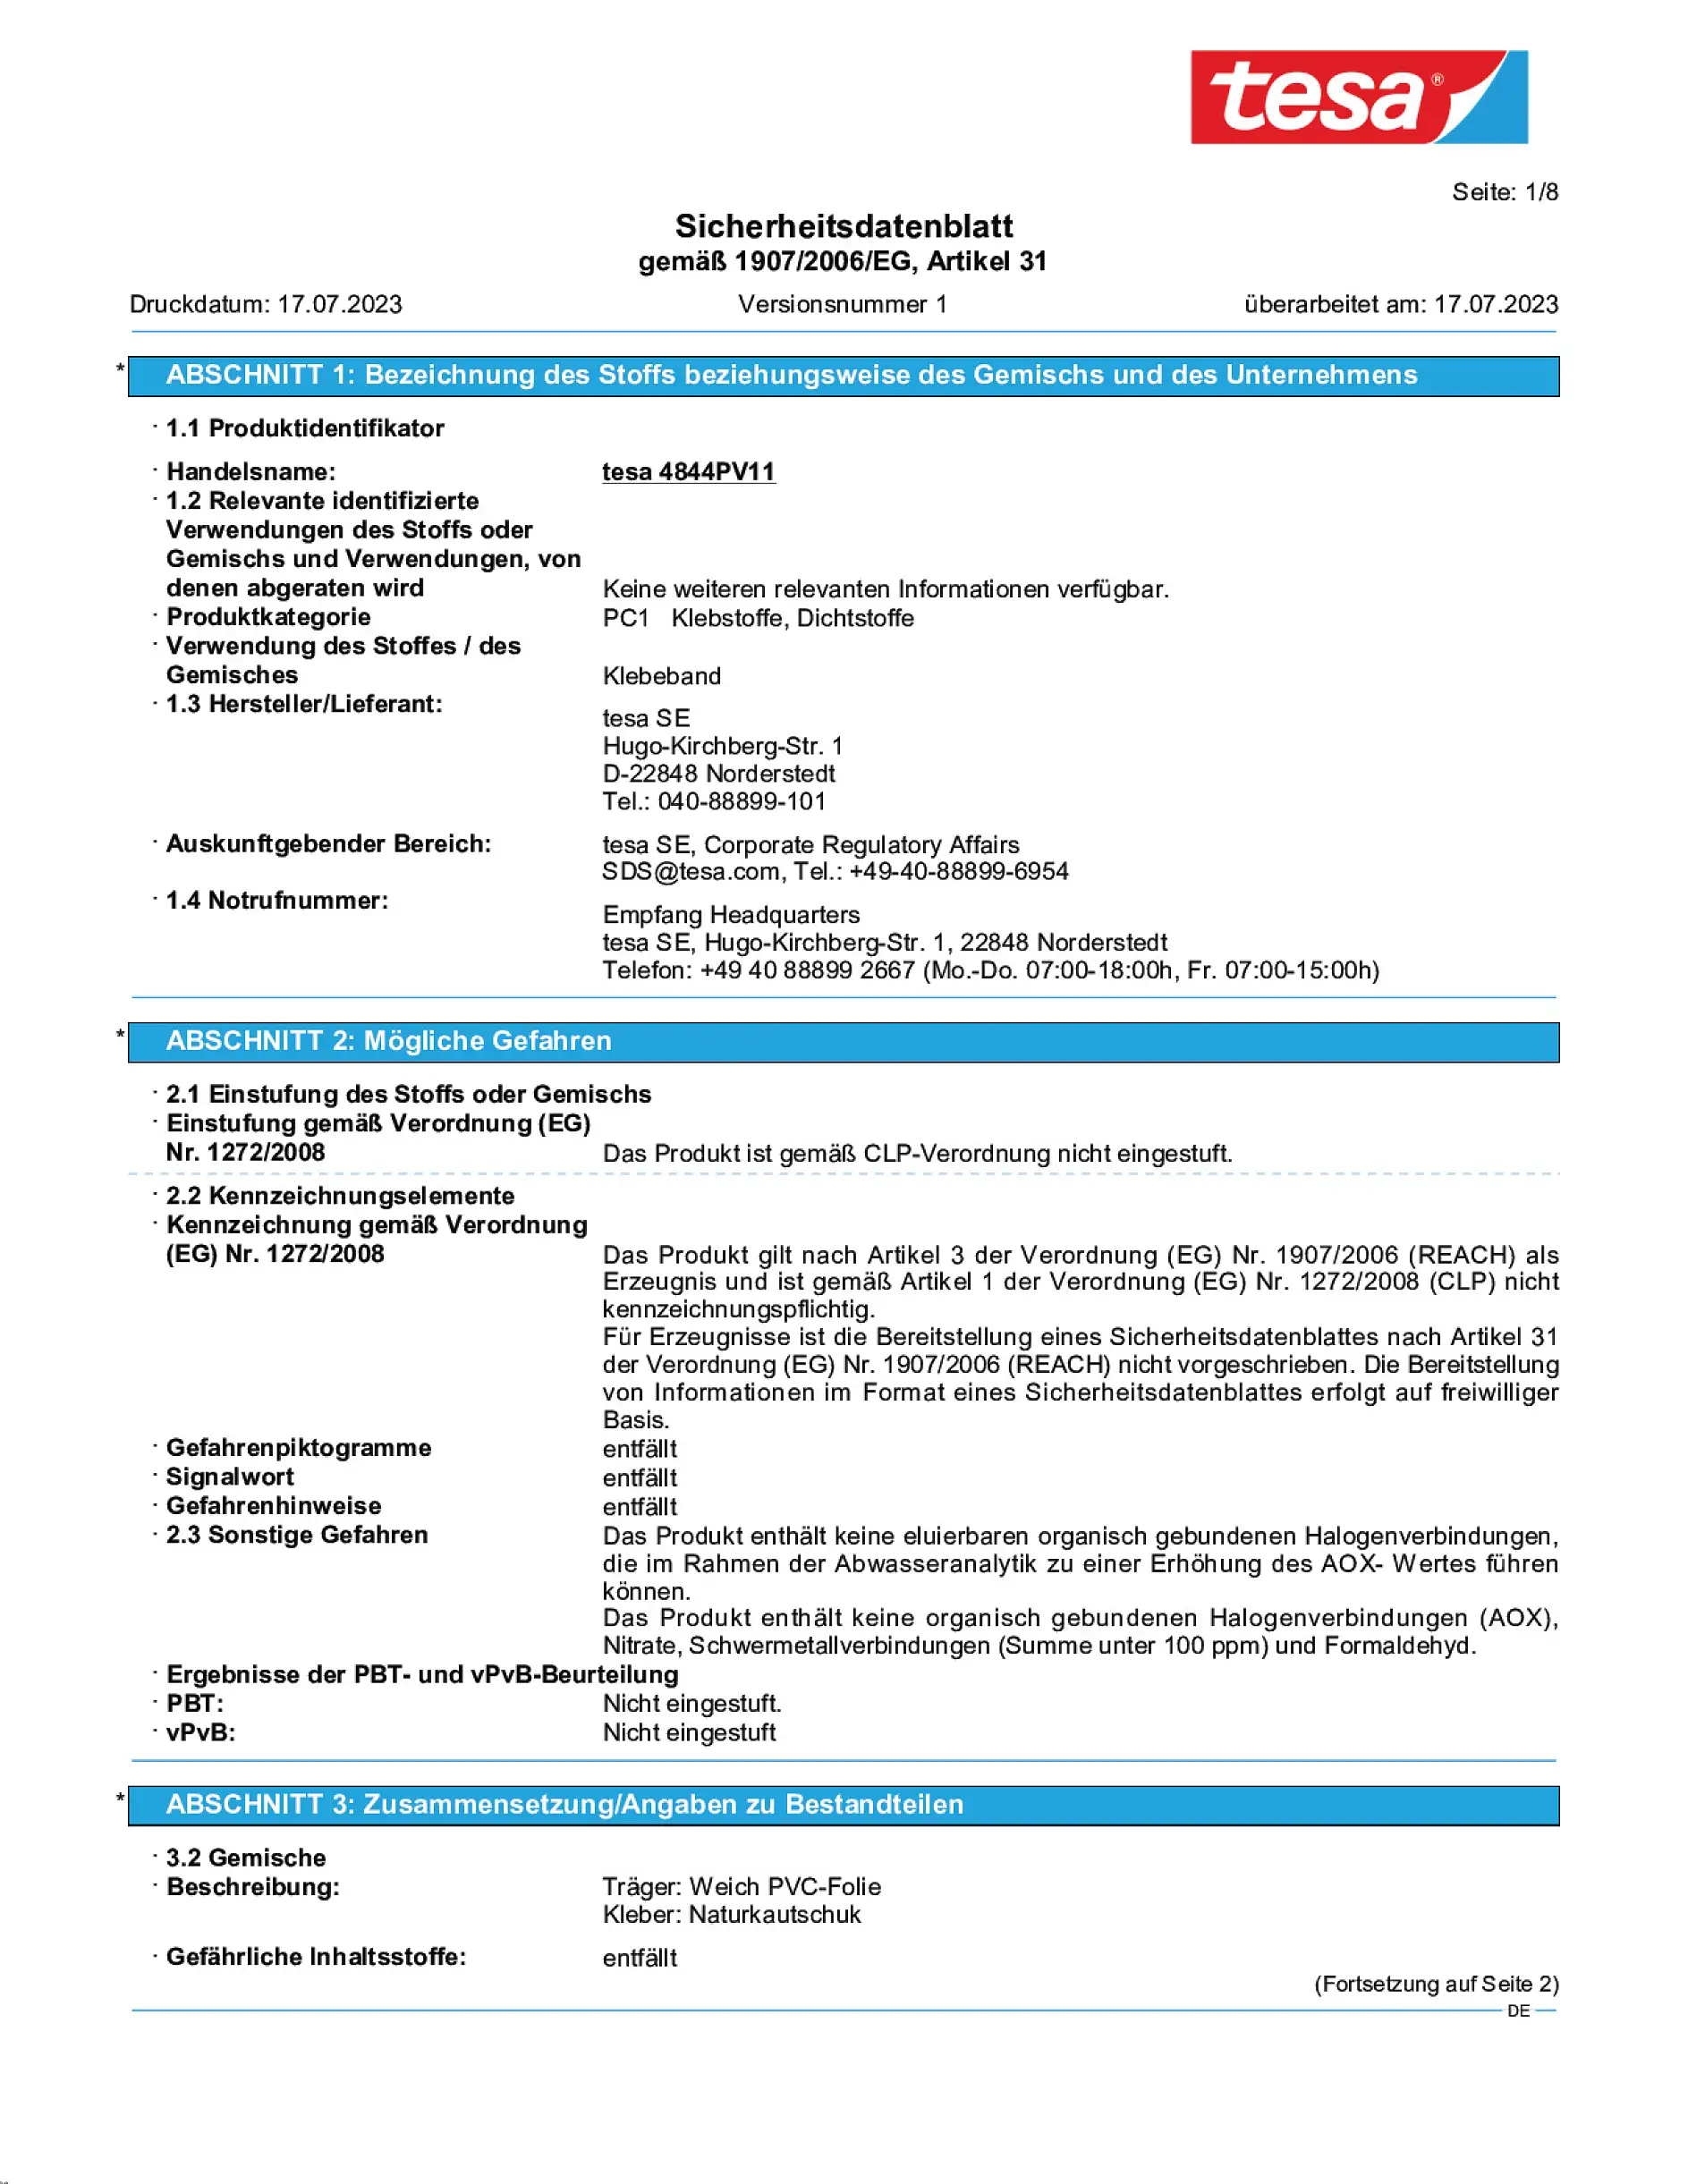 Safety data sheet_tesa® Professional 67001_de-DE_v1